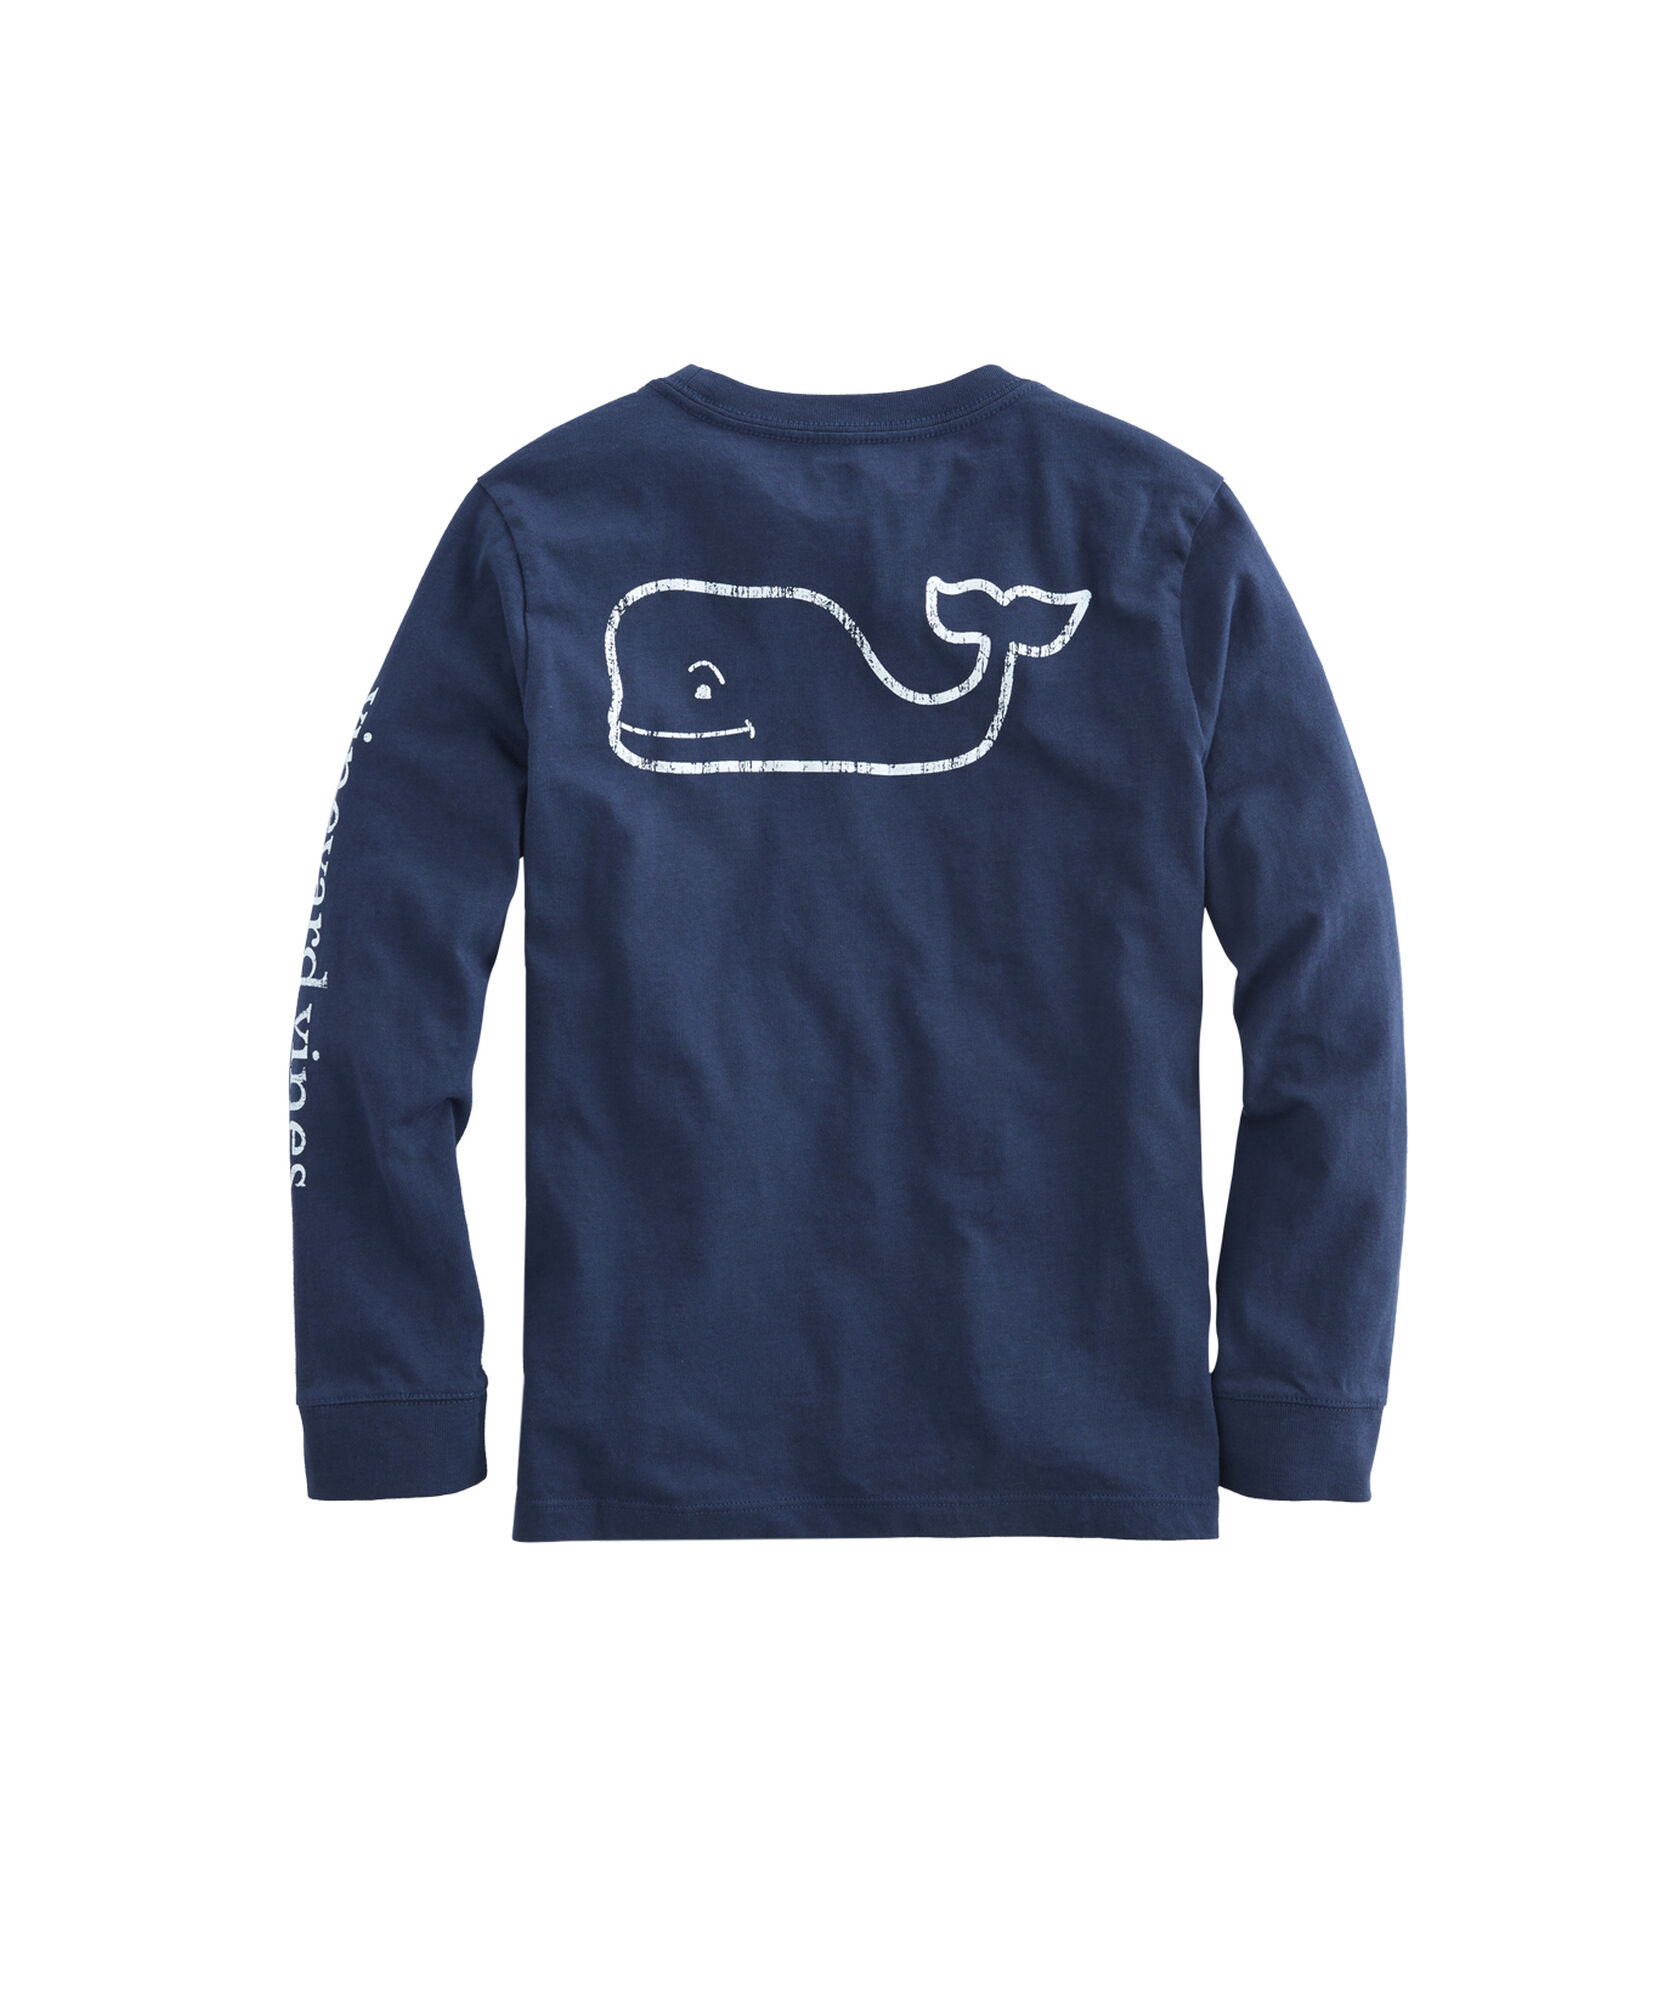 Shop Kids Long-Sleeve Vintage Whale Graphic T-Shirt at vineyard vines